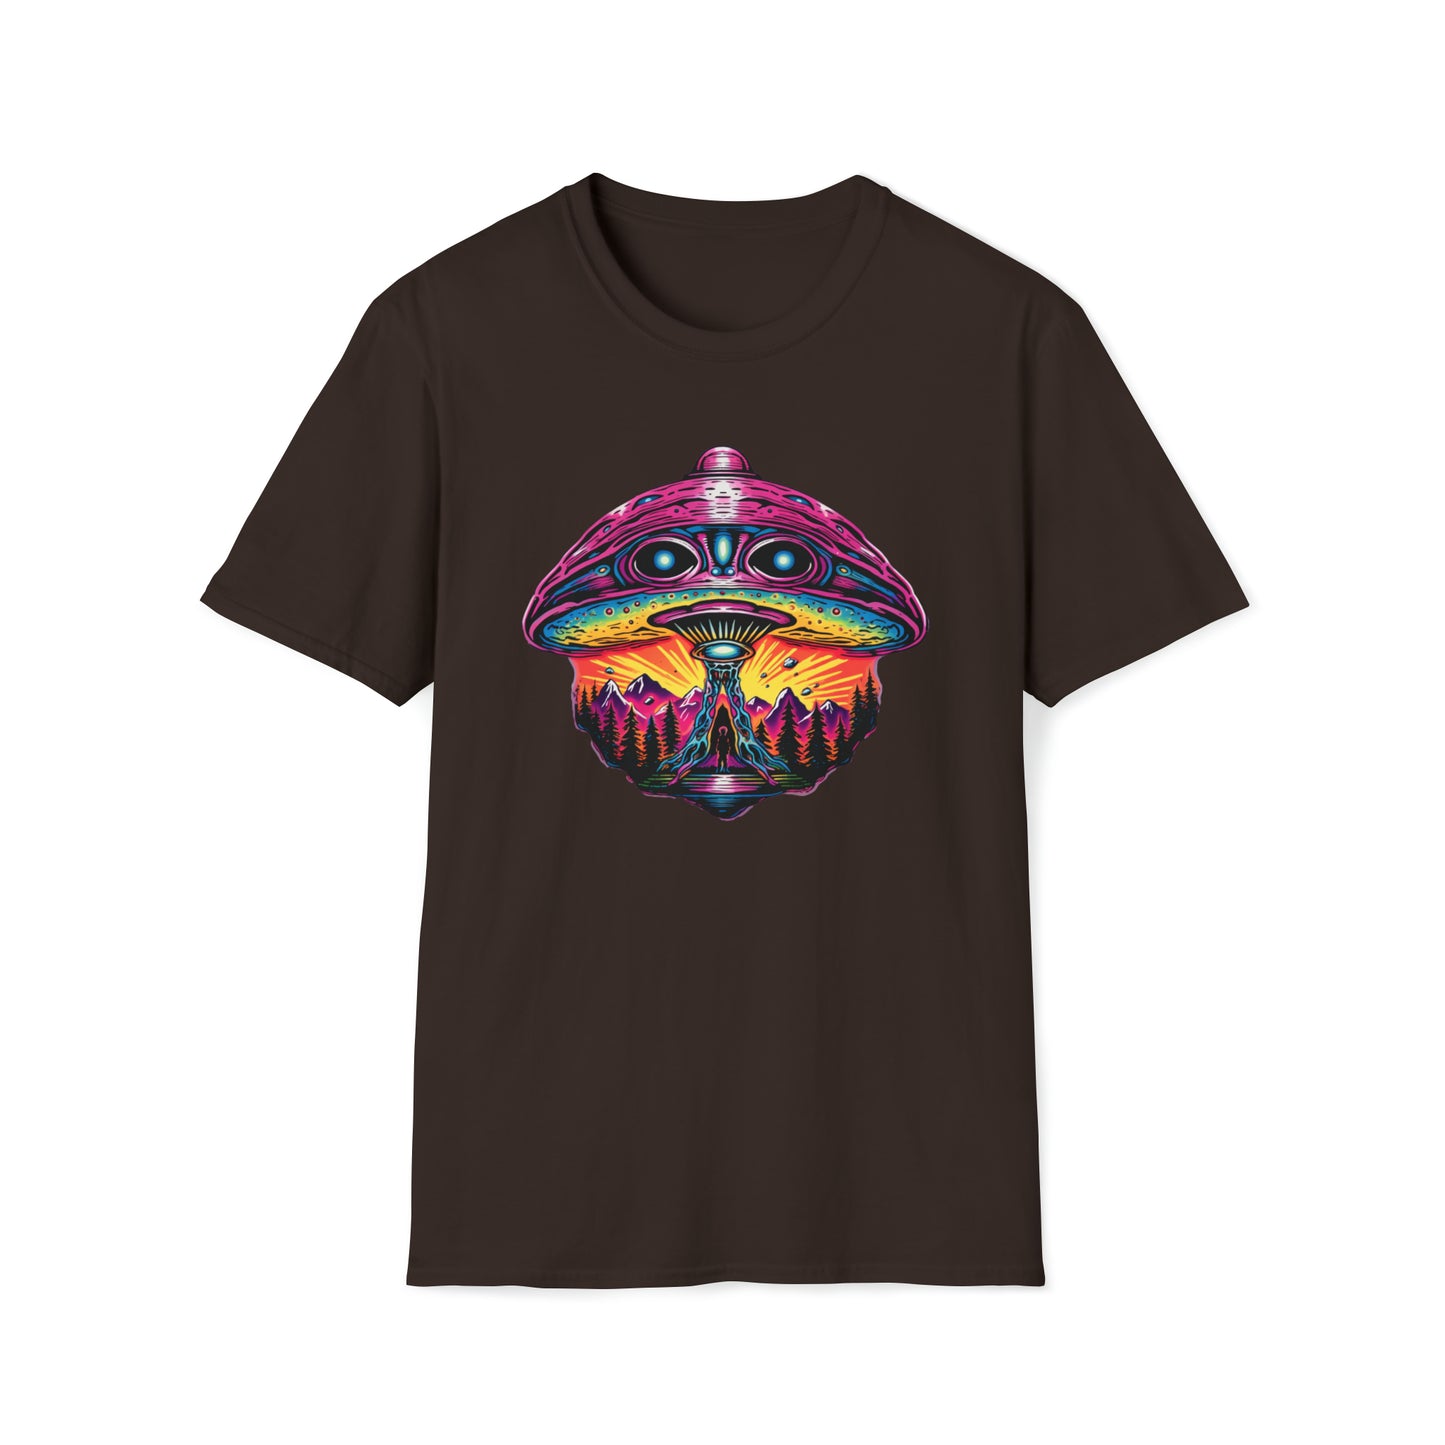 Trippy UFO Galactic Tee - Unisex Cosmic Alien Encounter T-Shirt, Vibrant Space Design